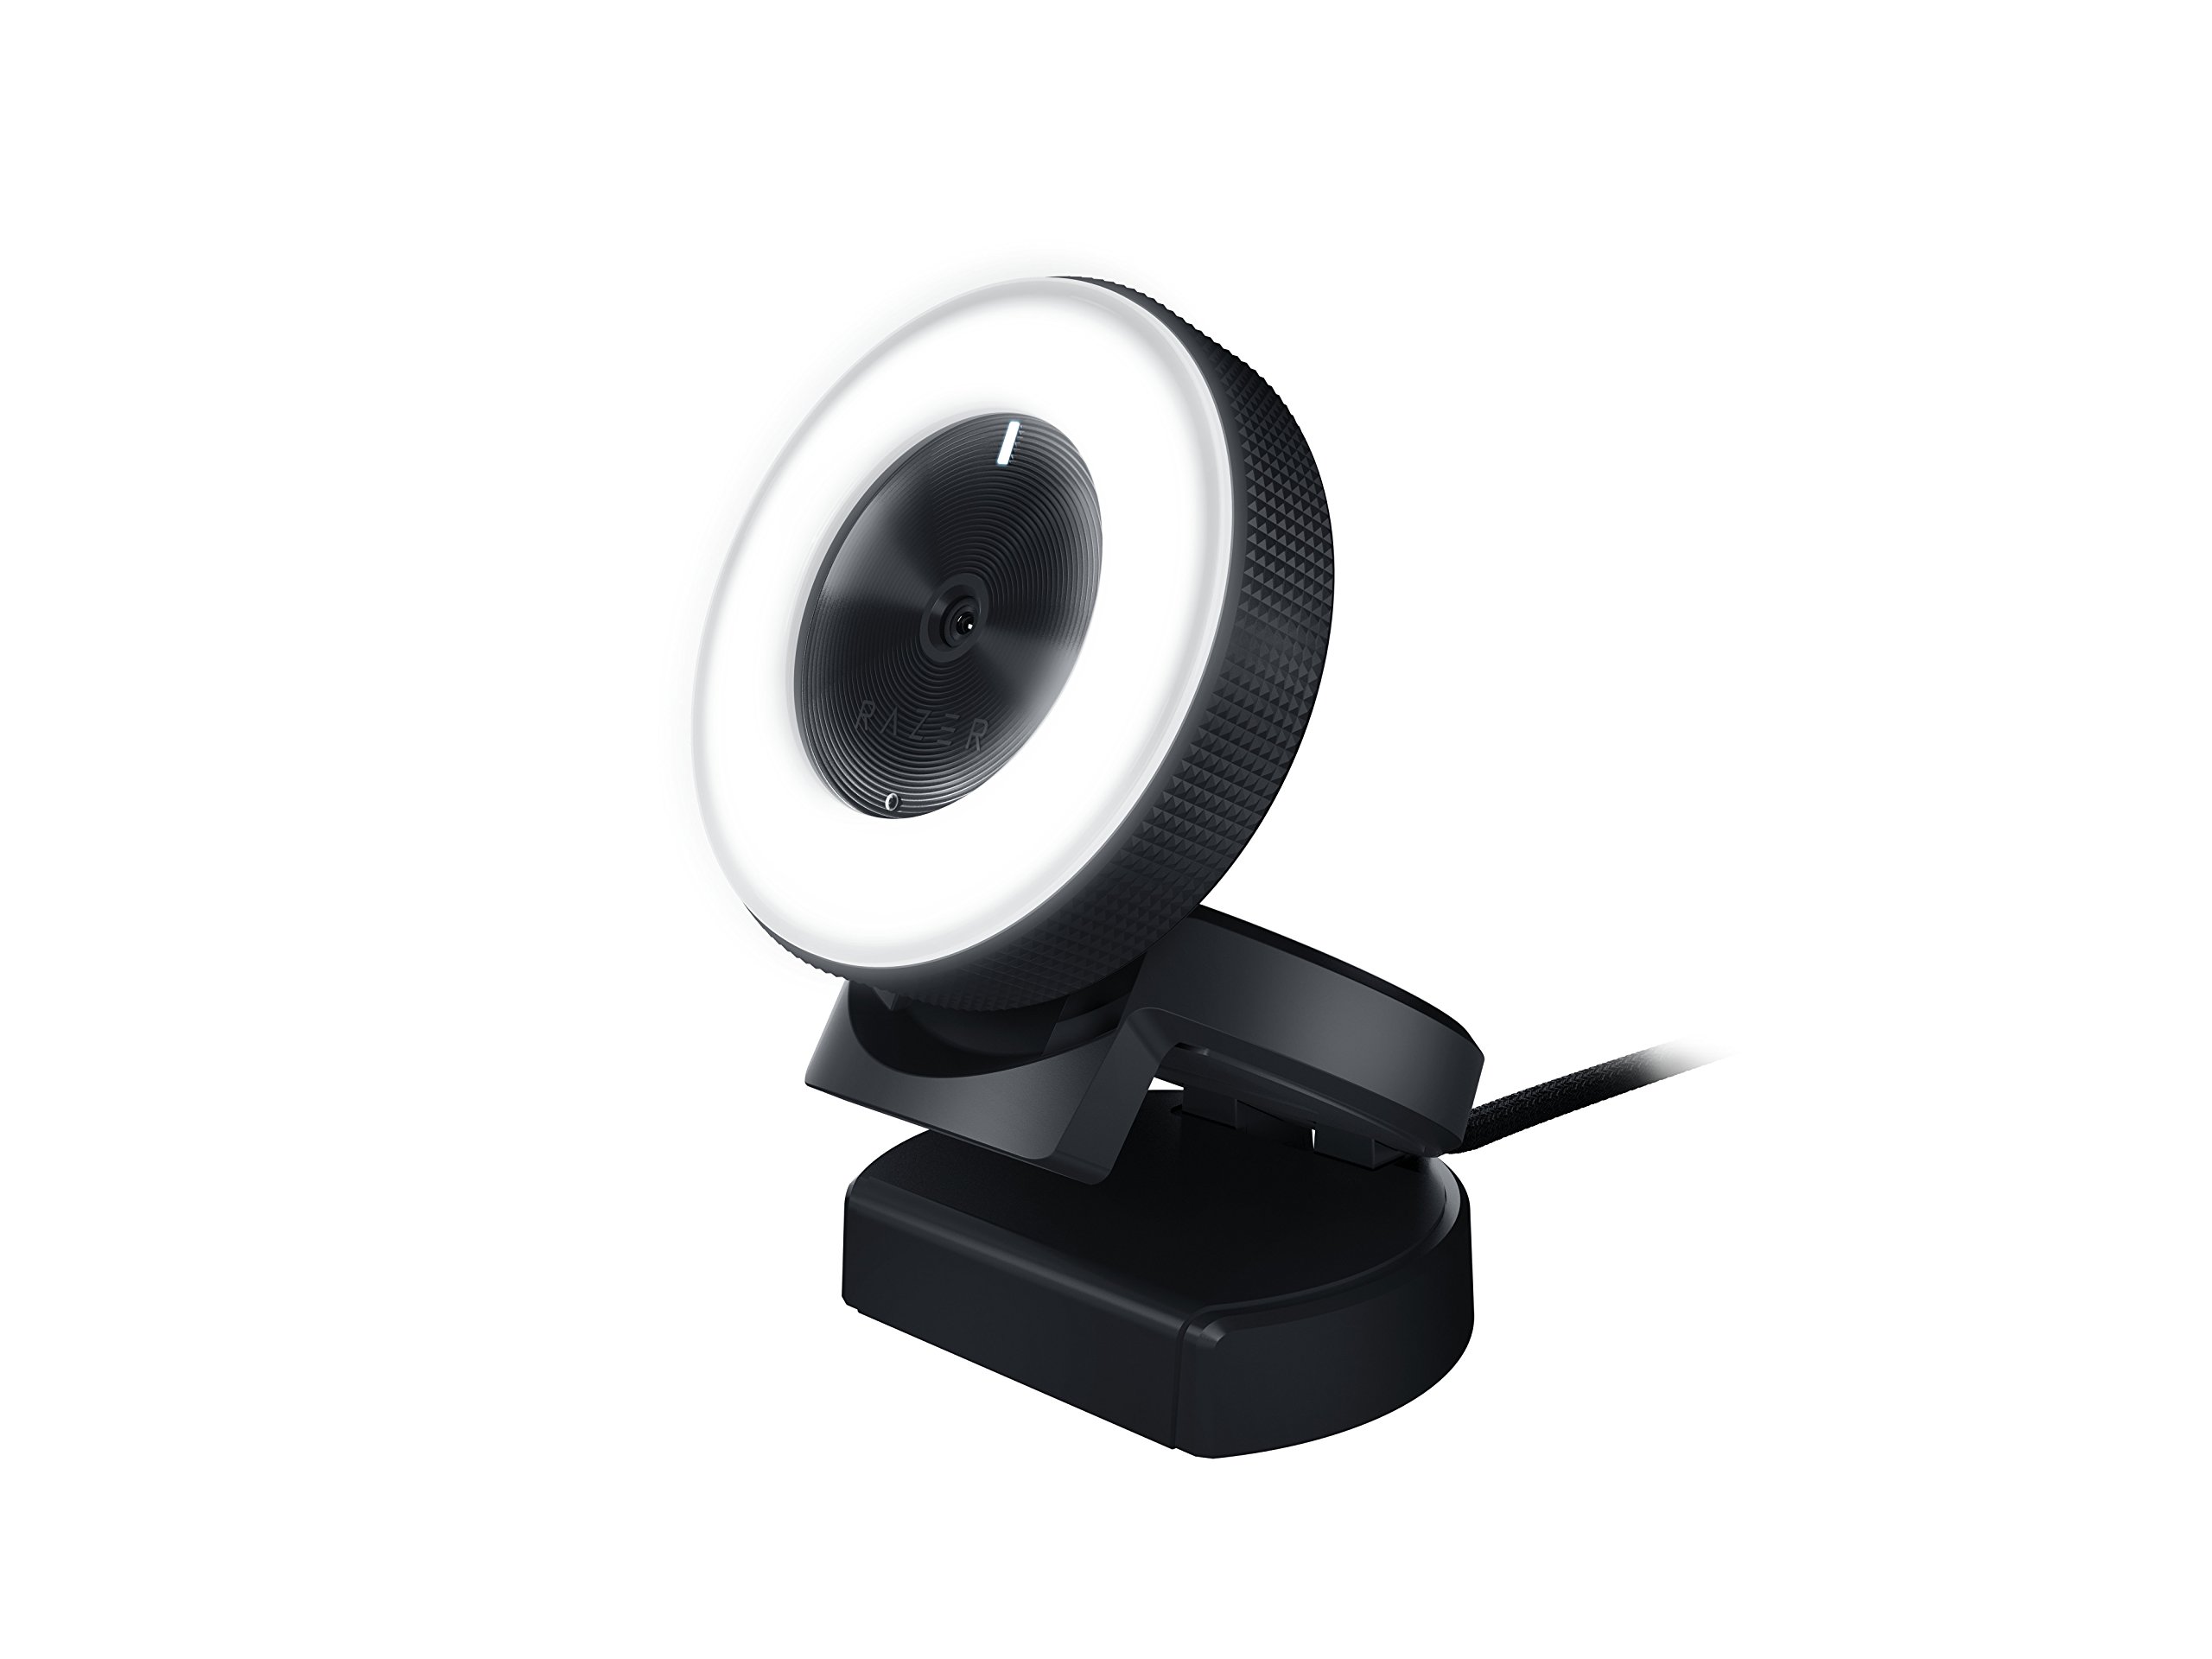 Razer Kiyo Full HD 1080p 30 FPS Streaming Webcam w/ Adjustable Ring Light & Auto Focus $42.75 + Free Shipping